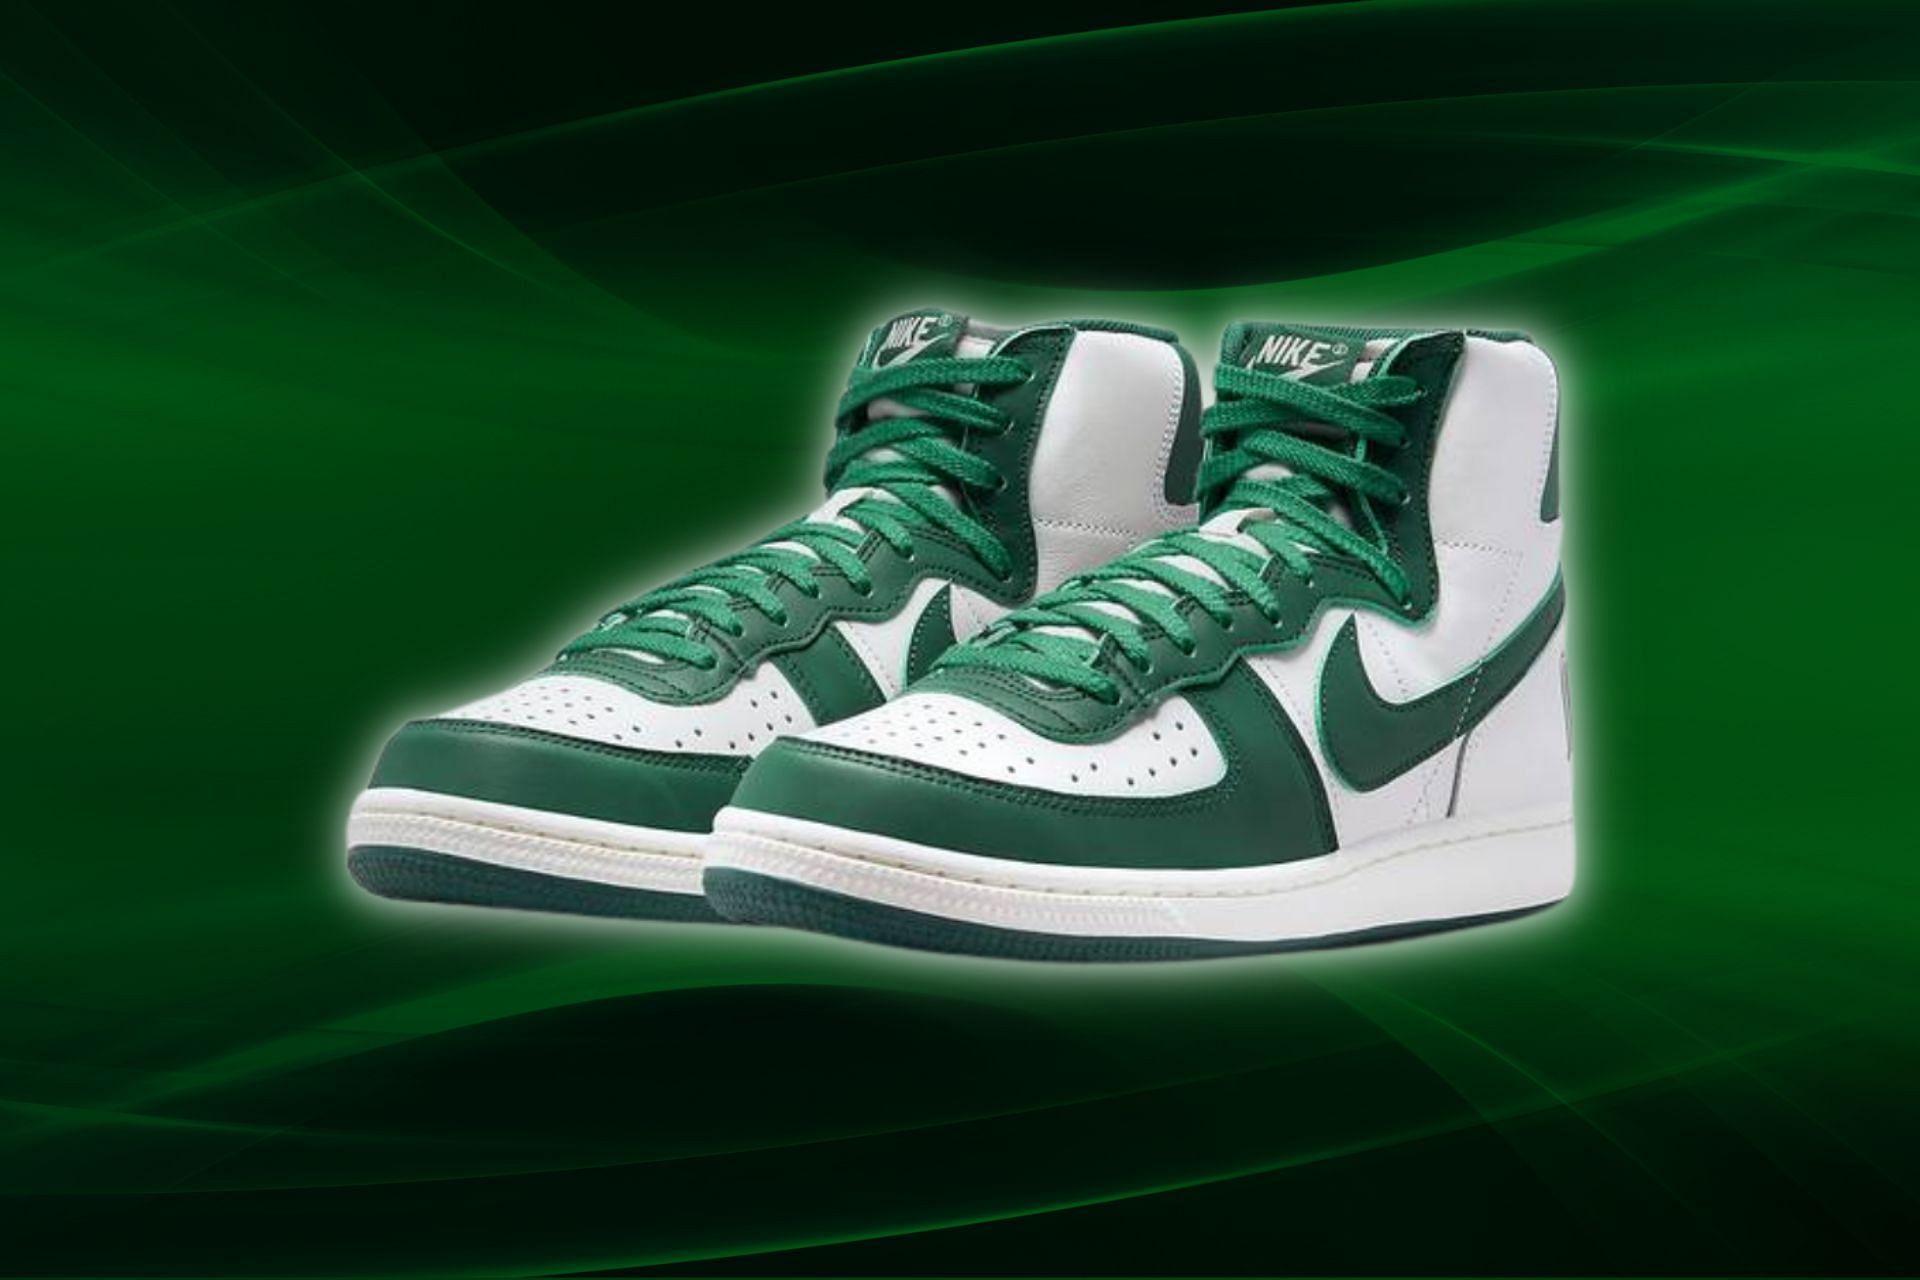 Nike Terminator High Nobel Green shoes (Image via Nike)